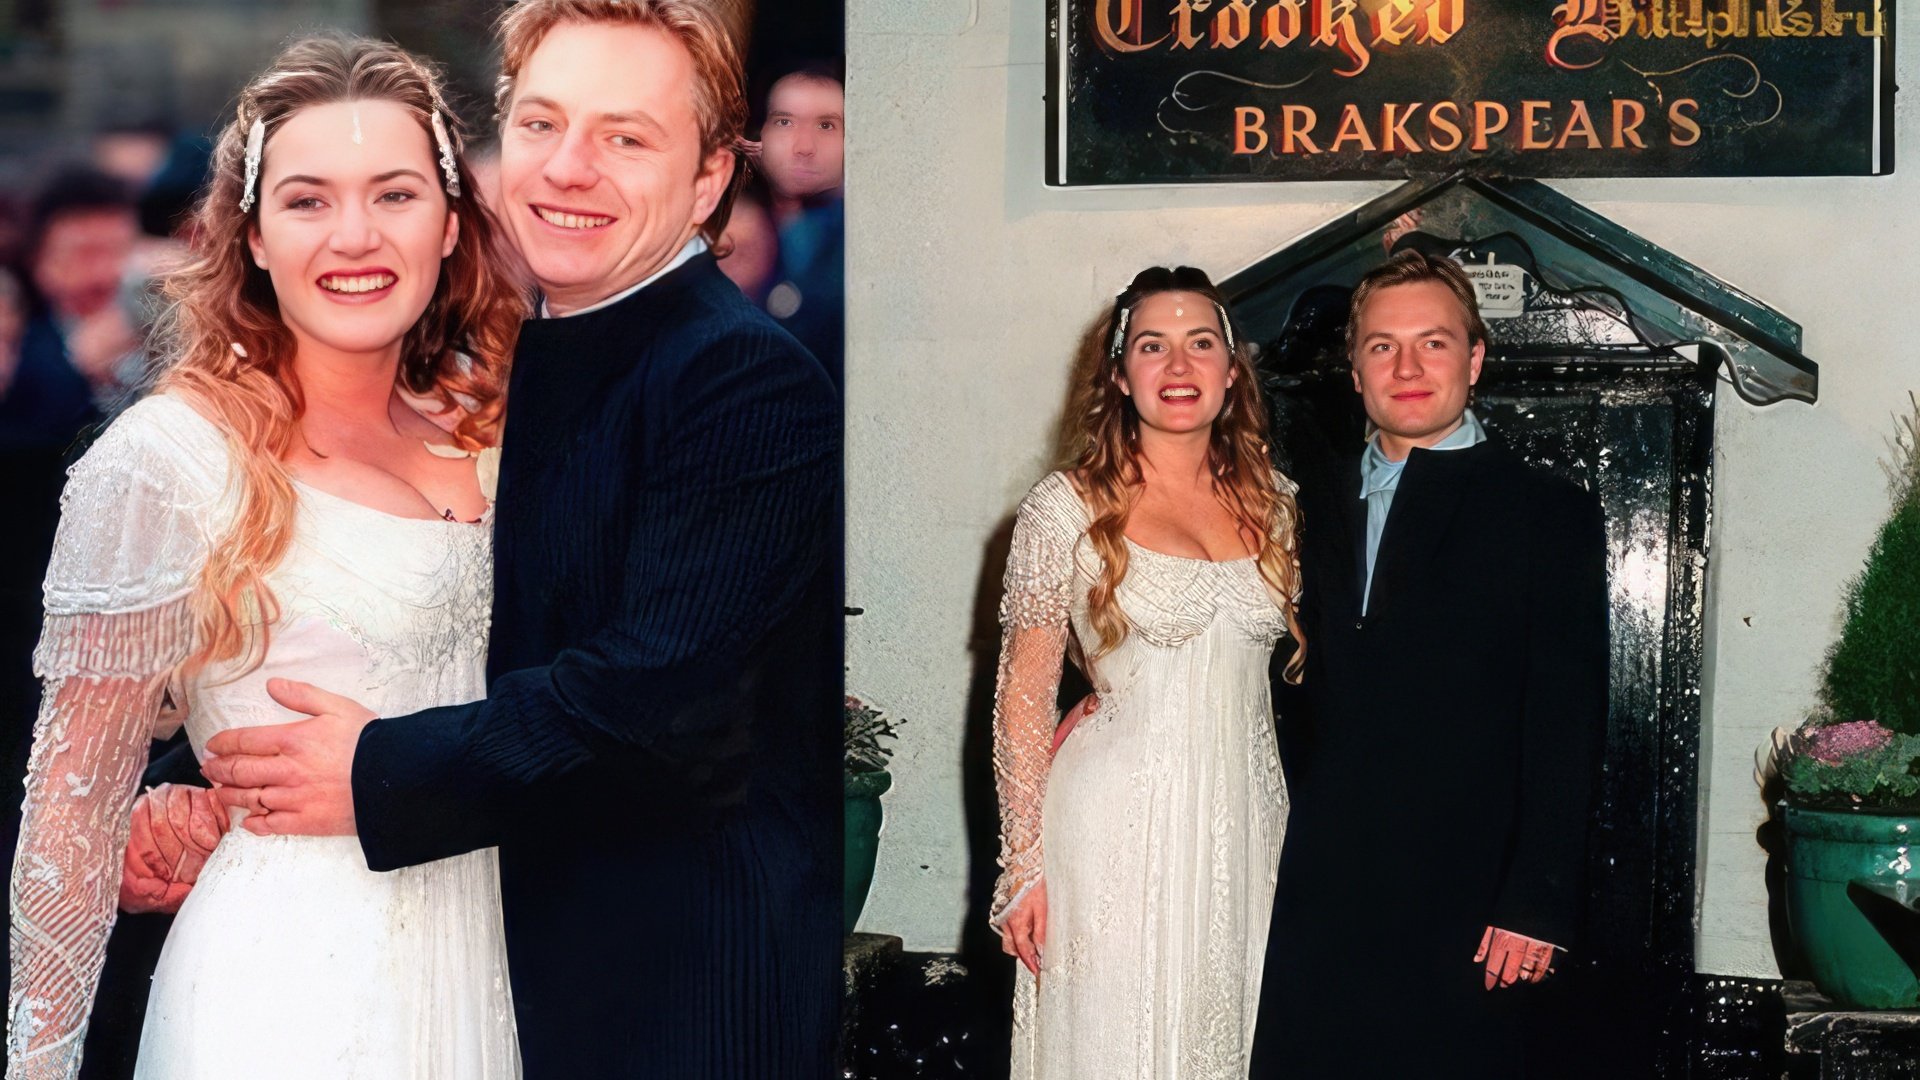 The wedding of Kate Winslet and Jim Threapleton